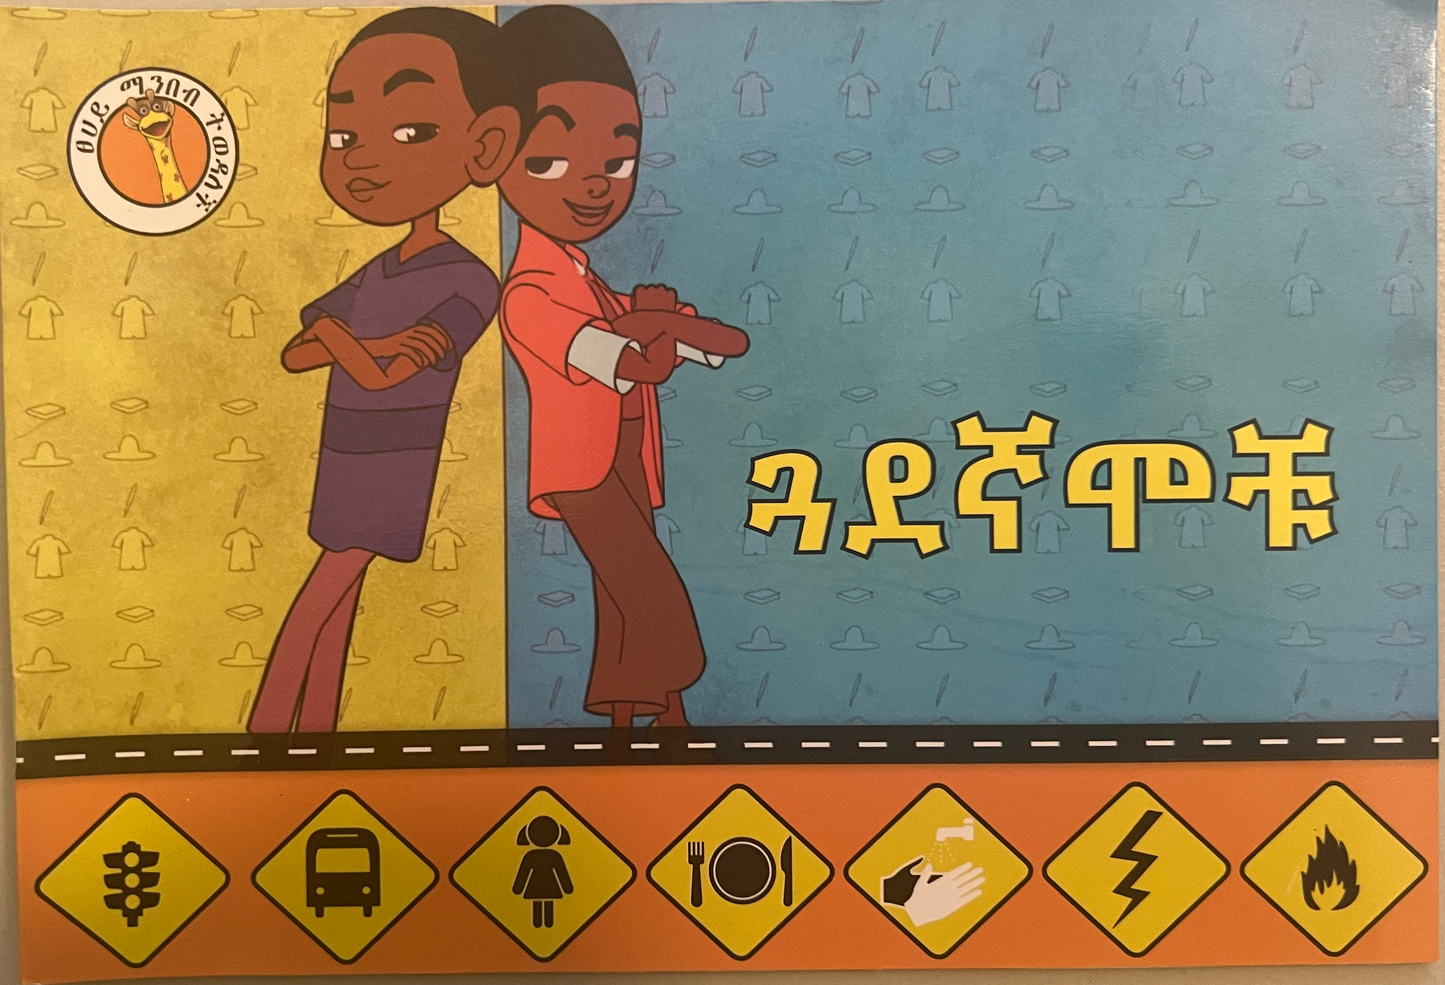 Amharic language textbook and storybook 22